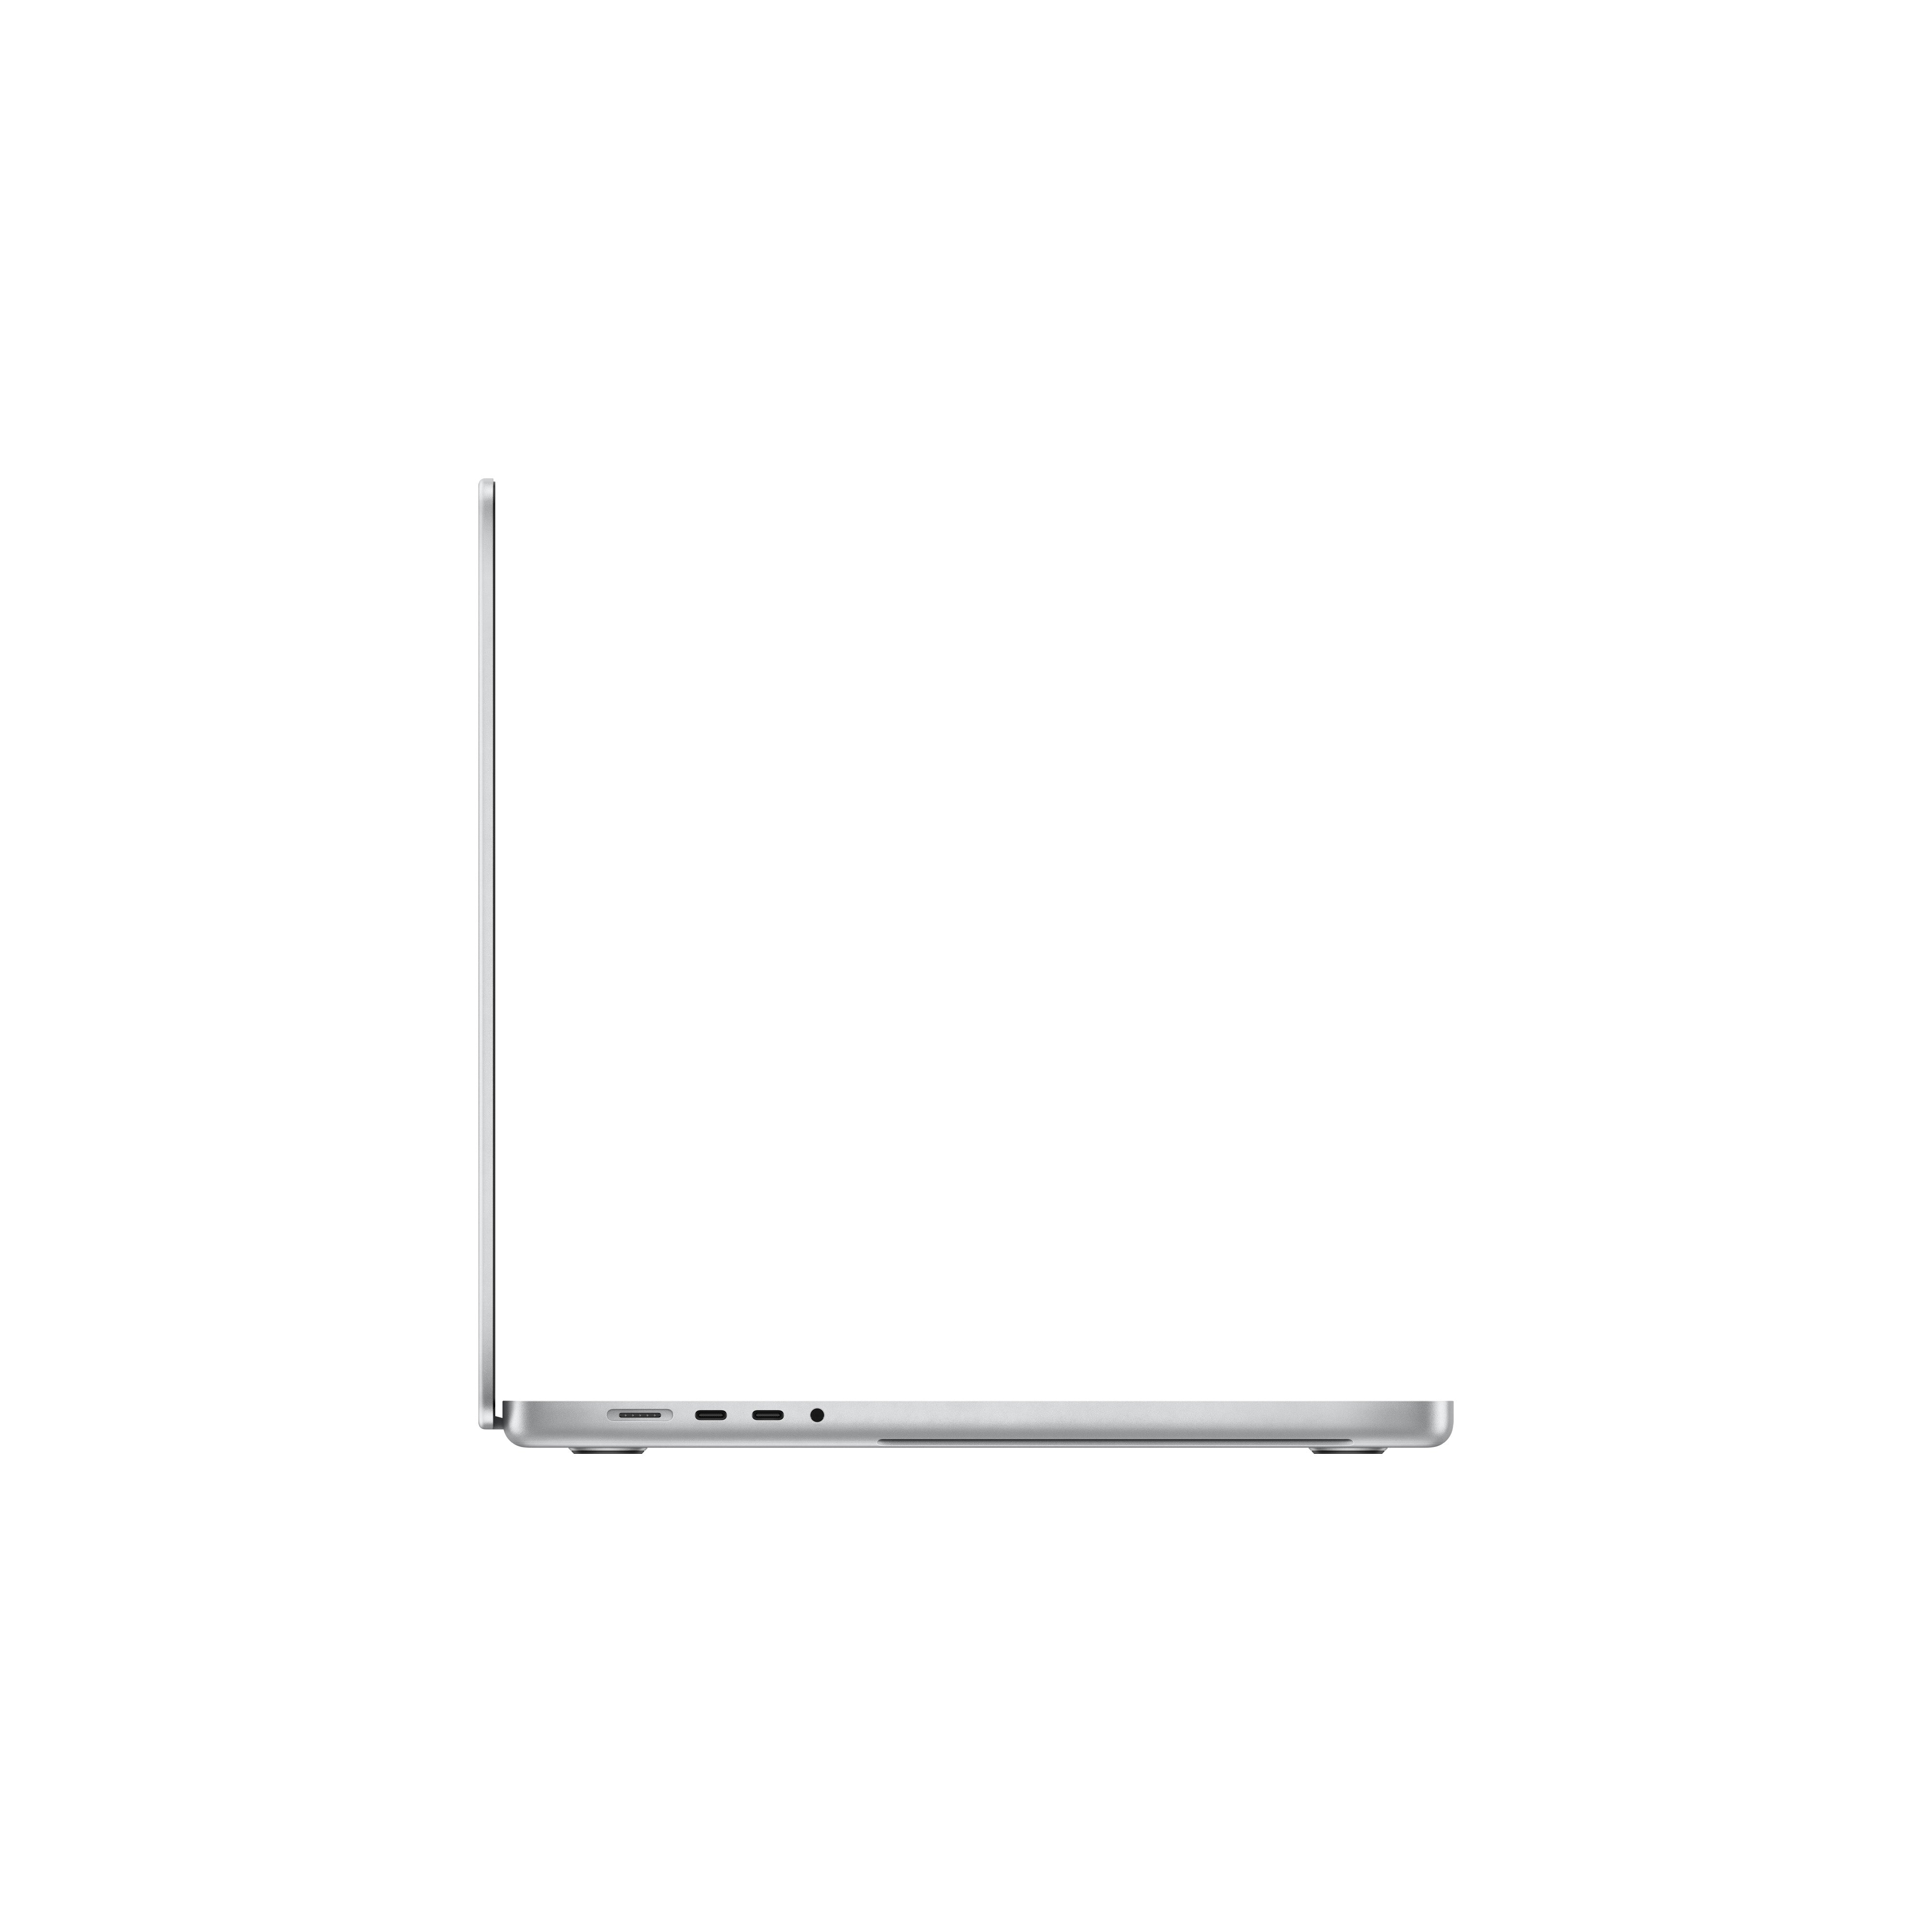 MacBook Pro (M1 Max, 16-inch)